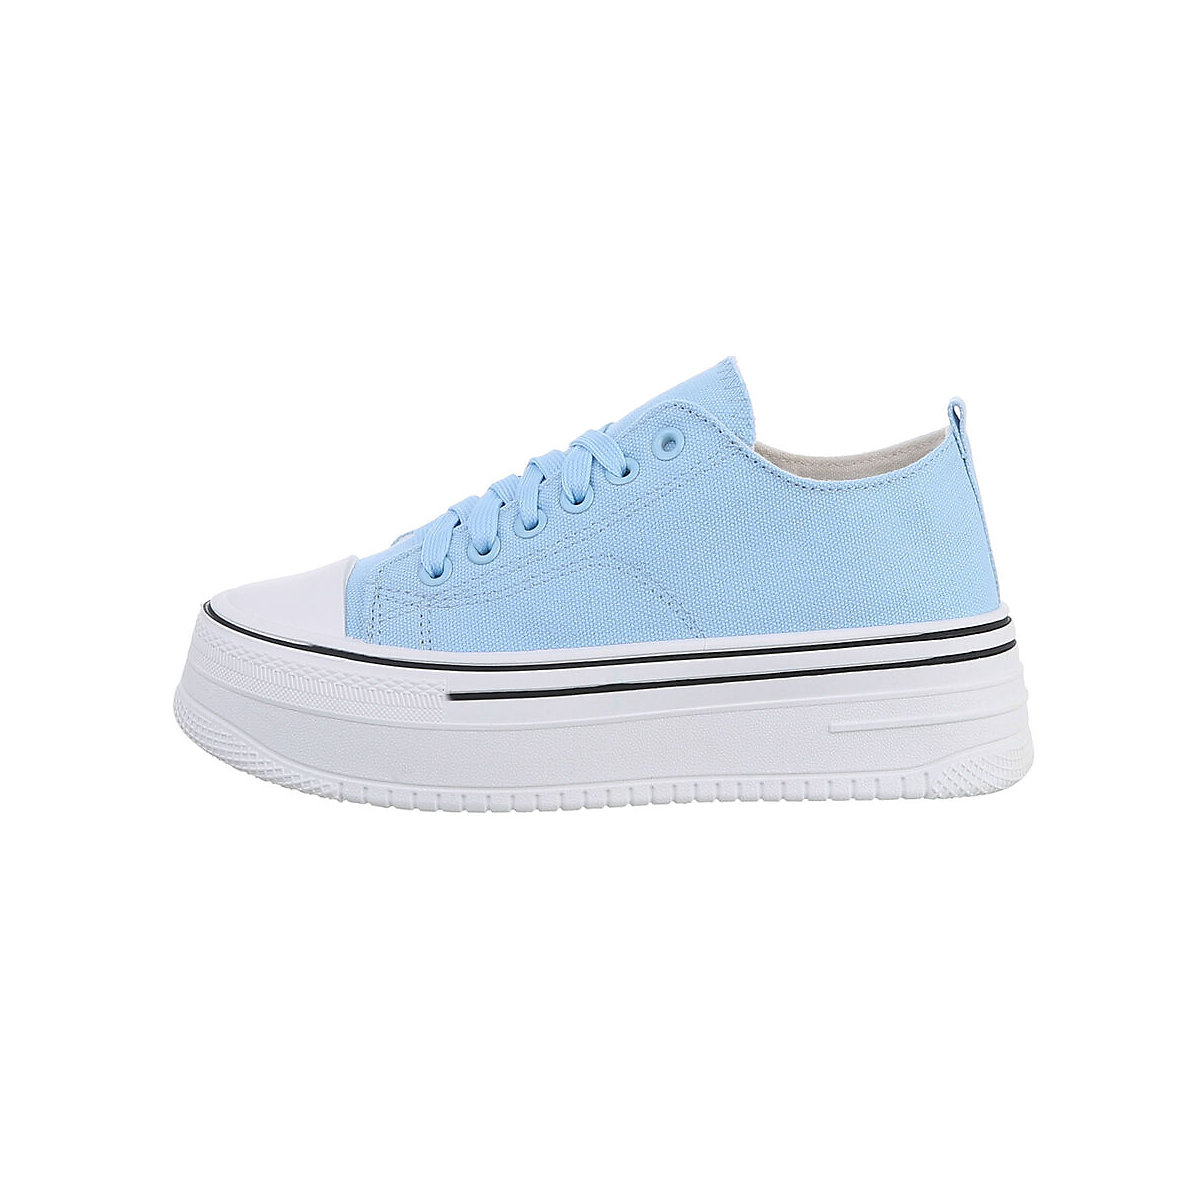 Ital-Design Sneakers Low Lochschnürung Flach hellblau/weiß